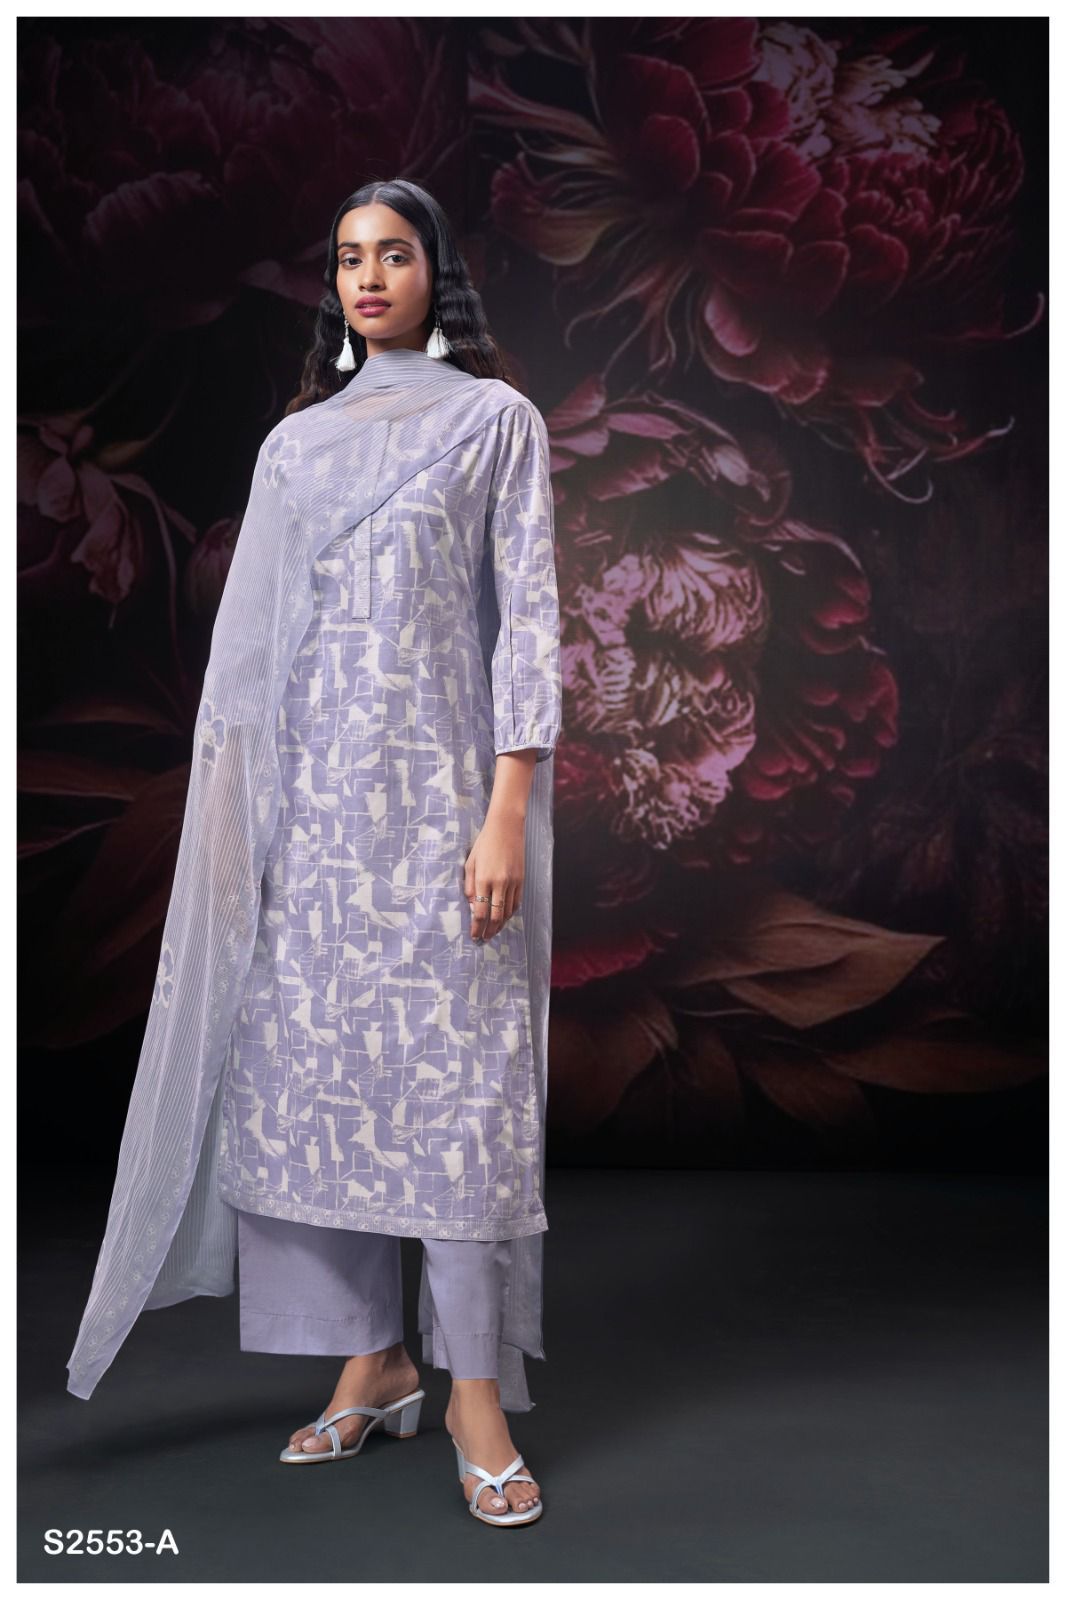 Helena 2553 Ganga Premium Cotton Plazzo Style Suits Wholesale